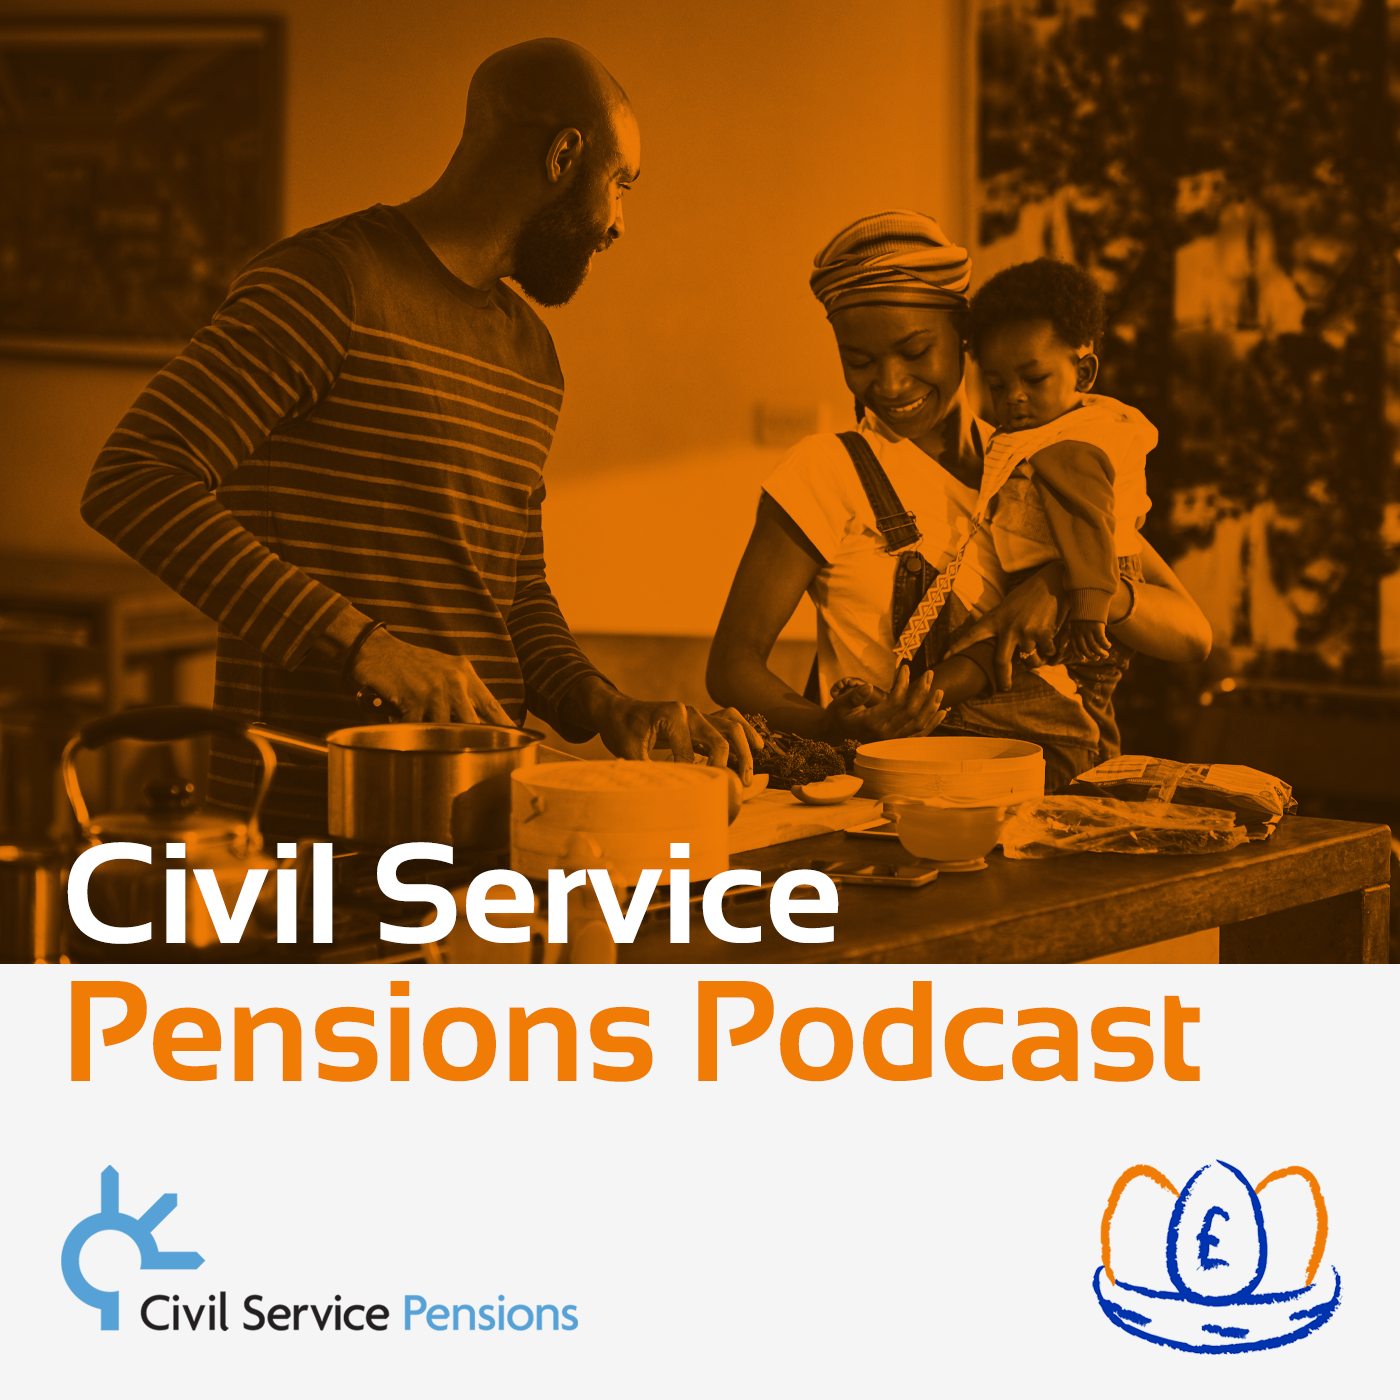 Civil Service Pensions Podcast Trailer